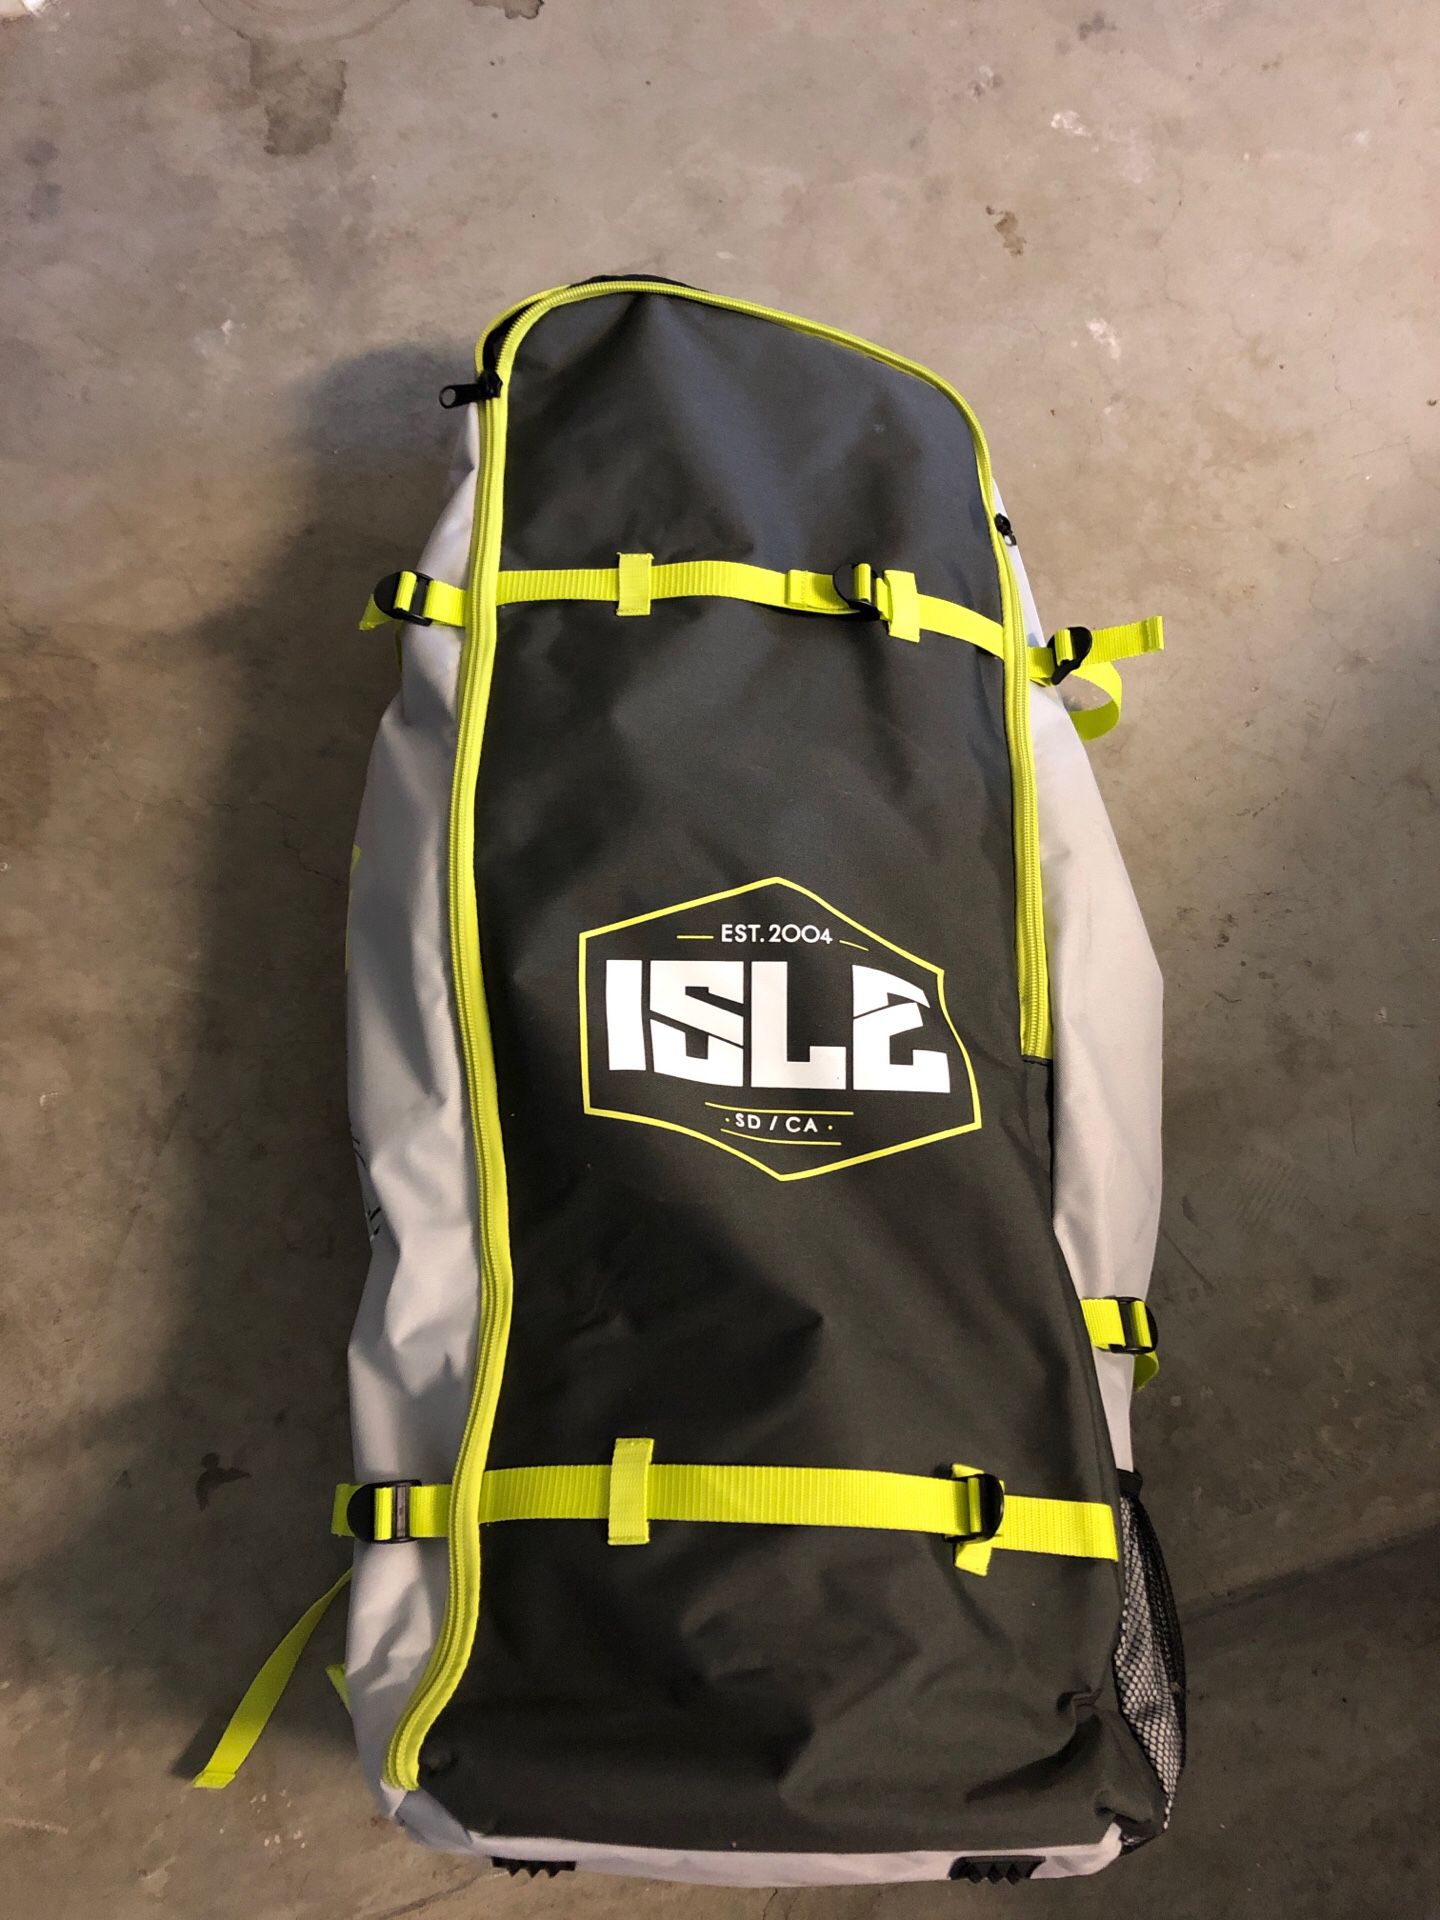 Backpack paddle board bag